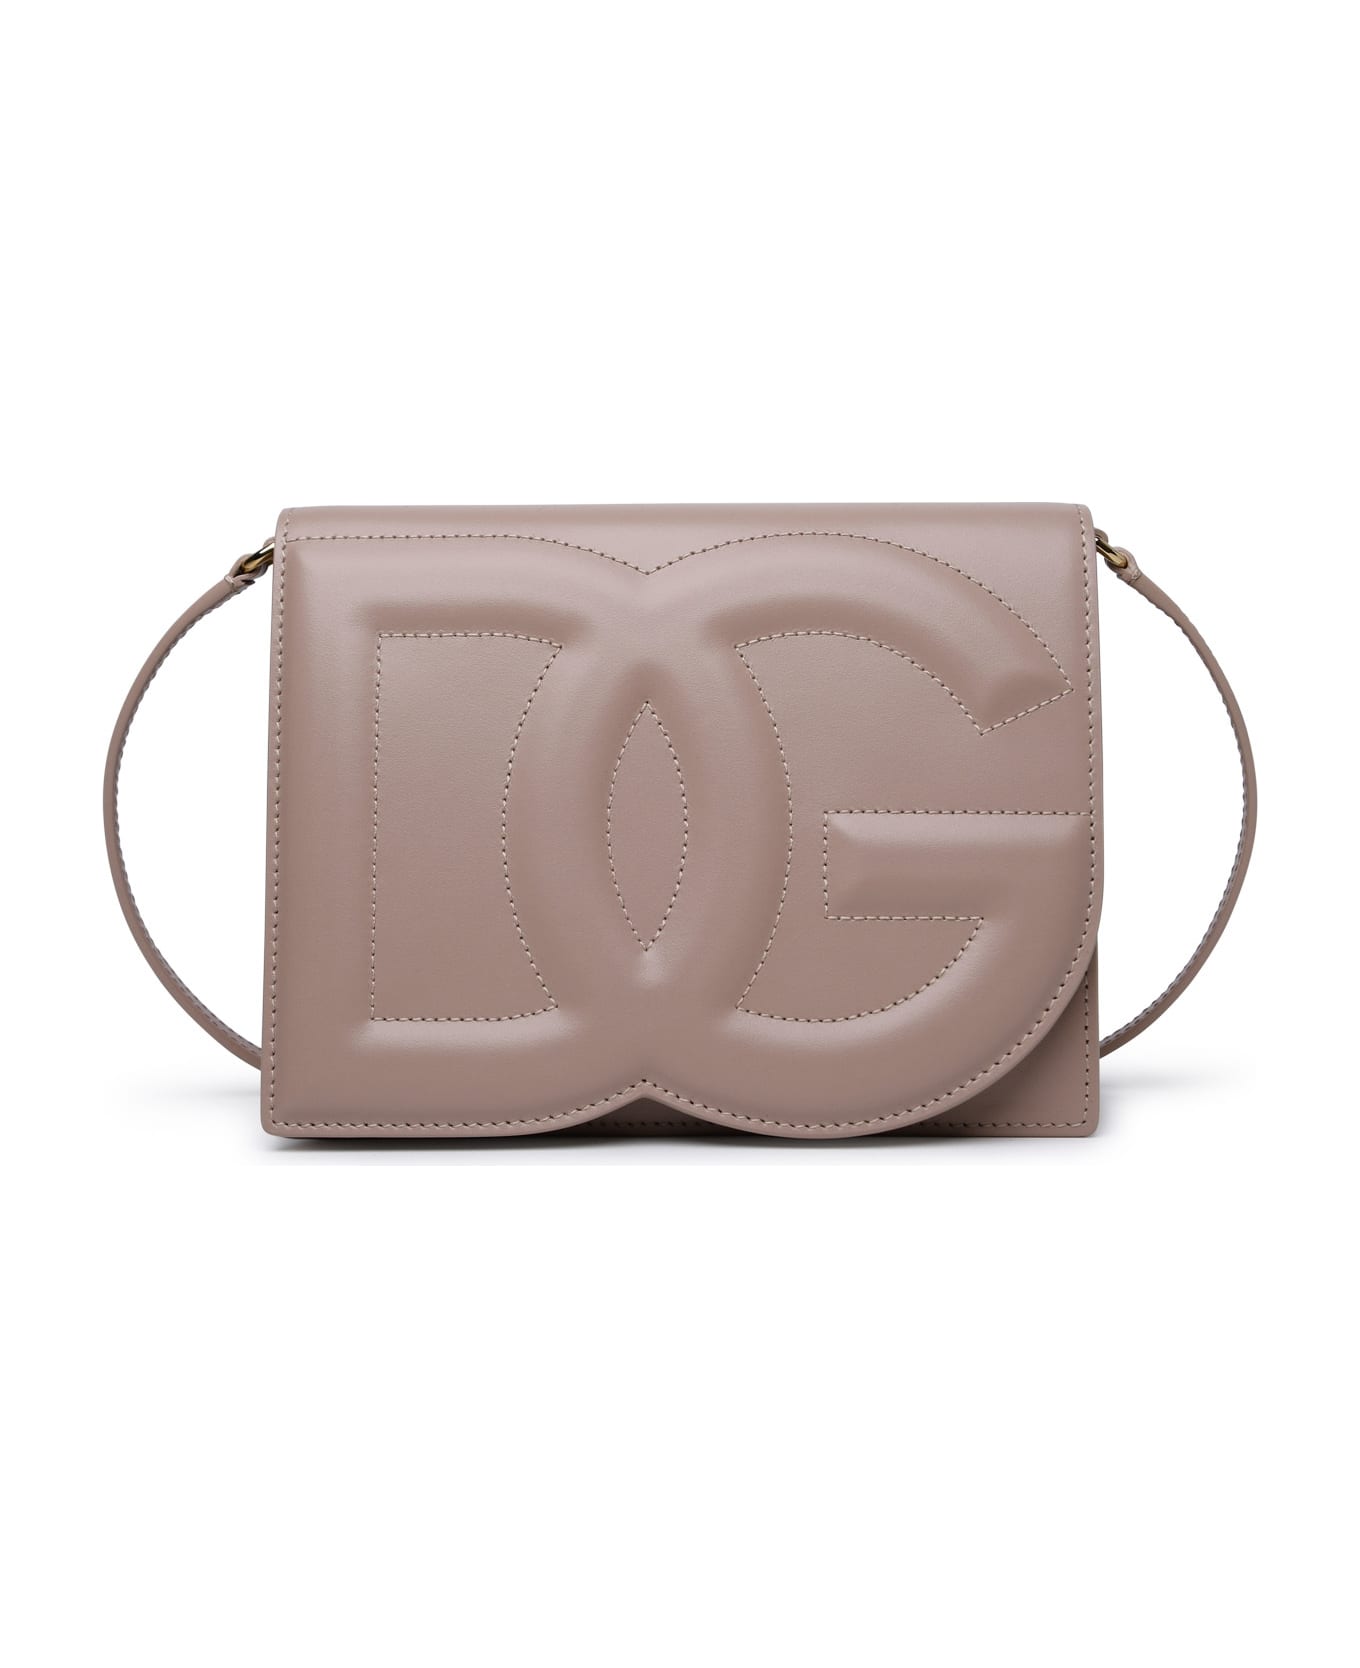 Dolce & Gabbana 'dg' Powder Calf Leather Bag - Nude ショルダーバッグ